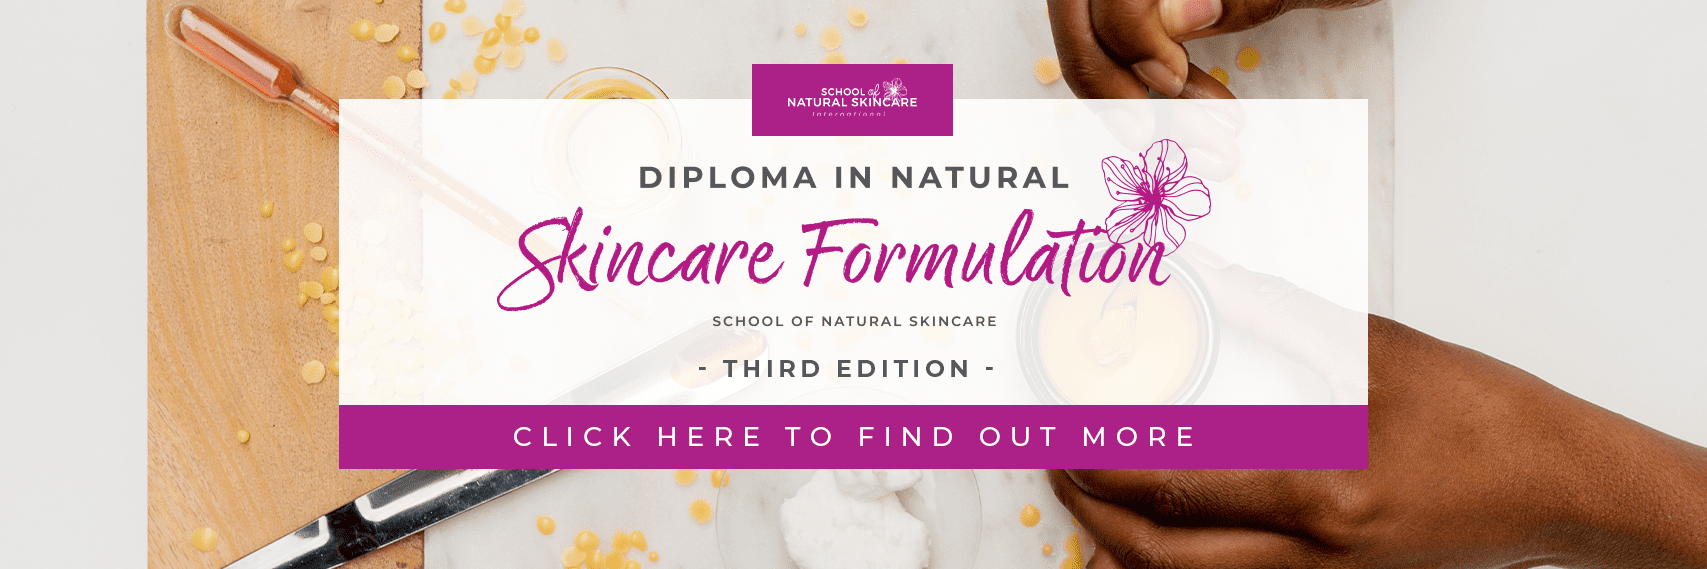 How natural is natural skincare? Skincare Formulation 